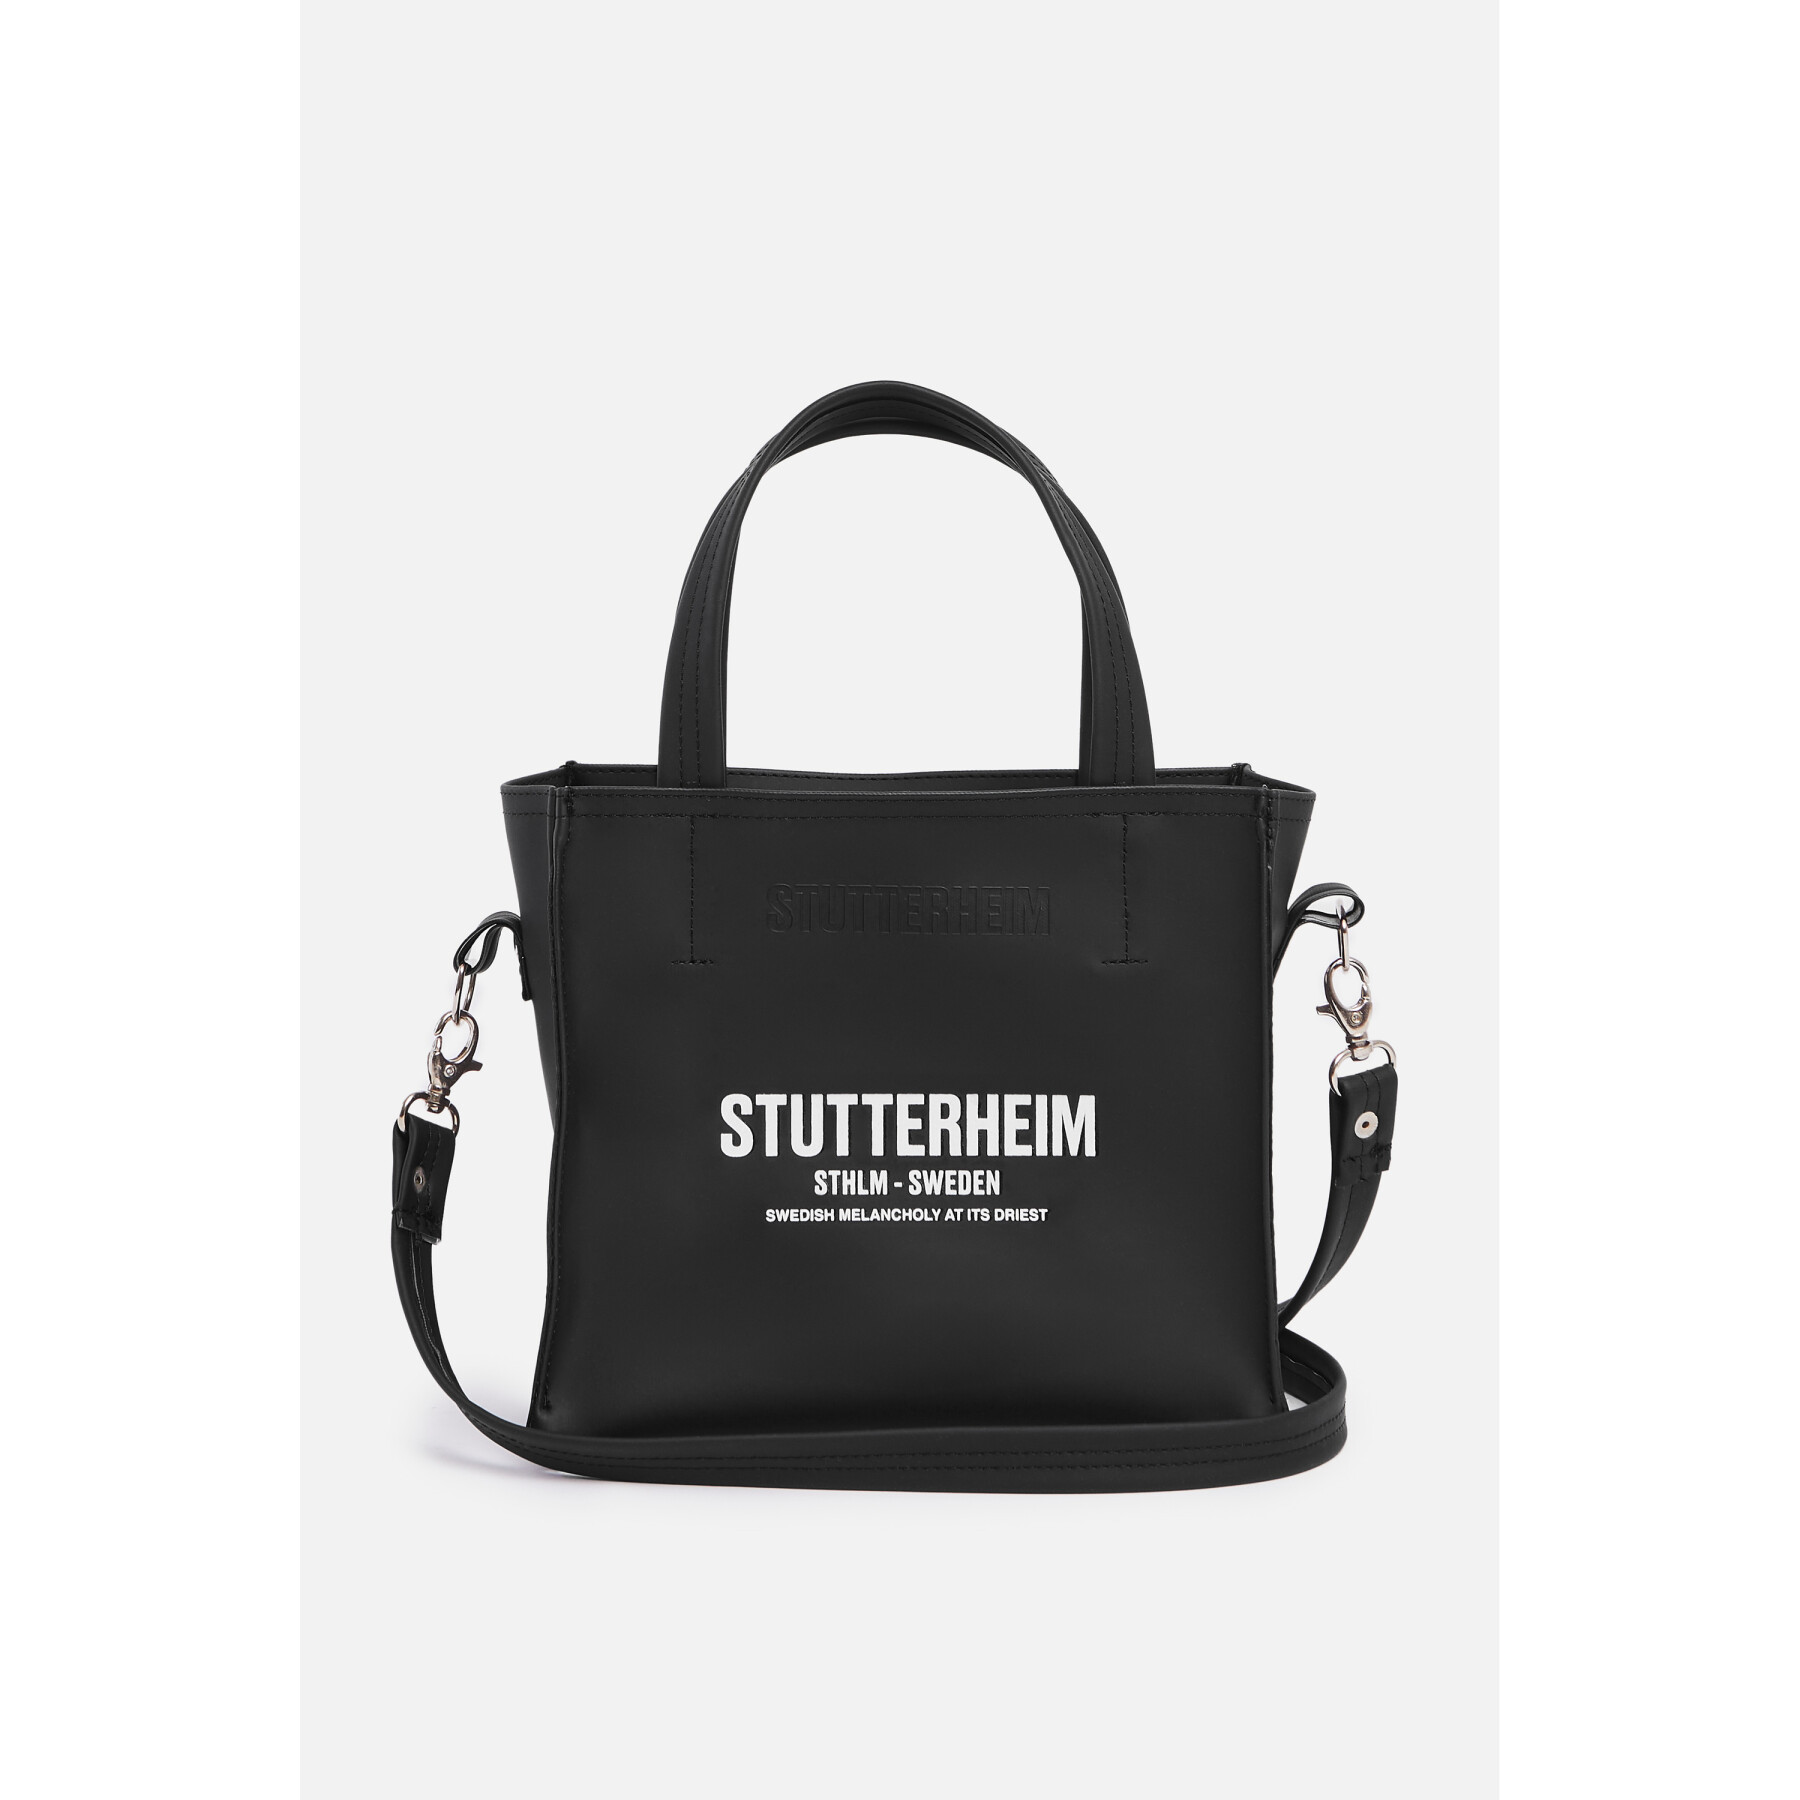 Damenhandtasche Stutterheim Biblio